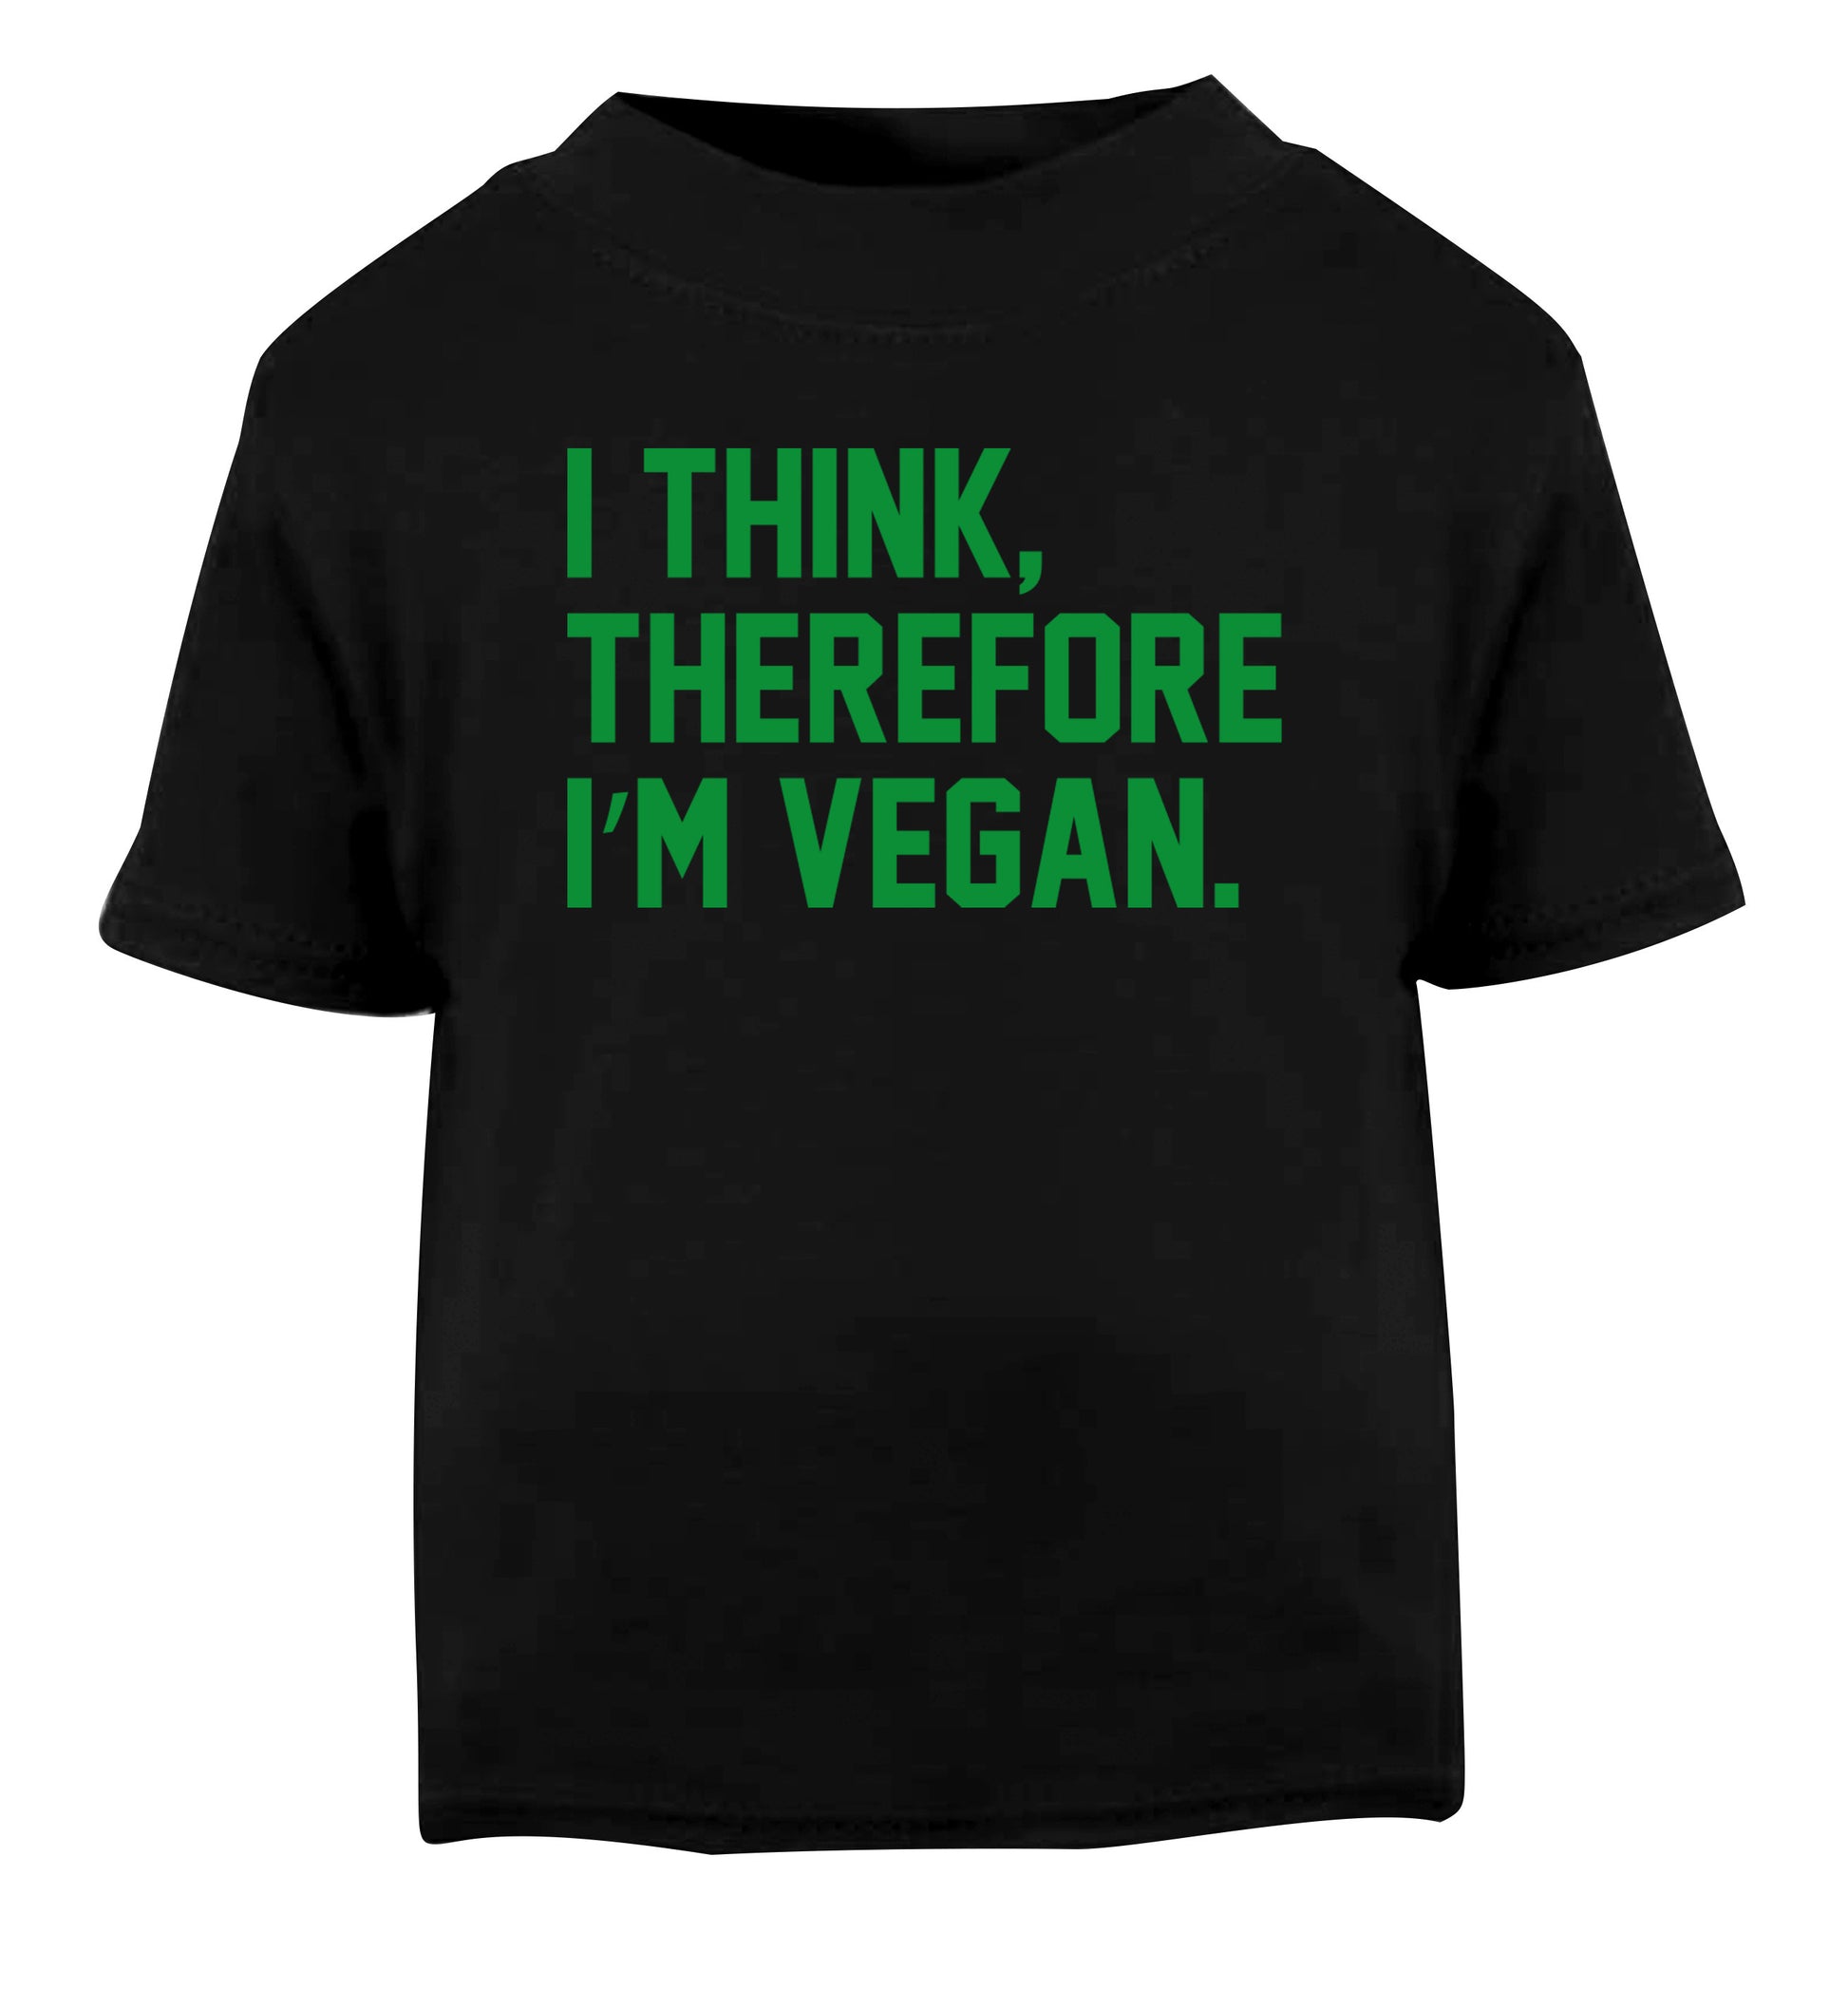 I think therefore I'm vegan Black Baby Toddler Tshirt 2 years